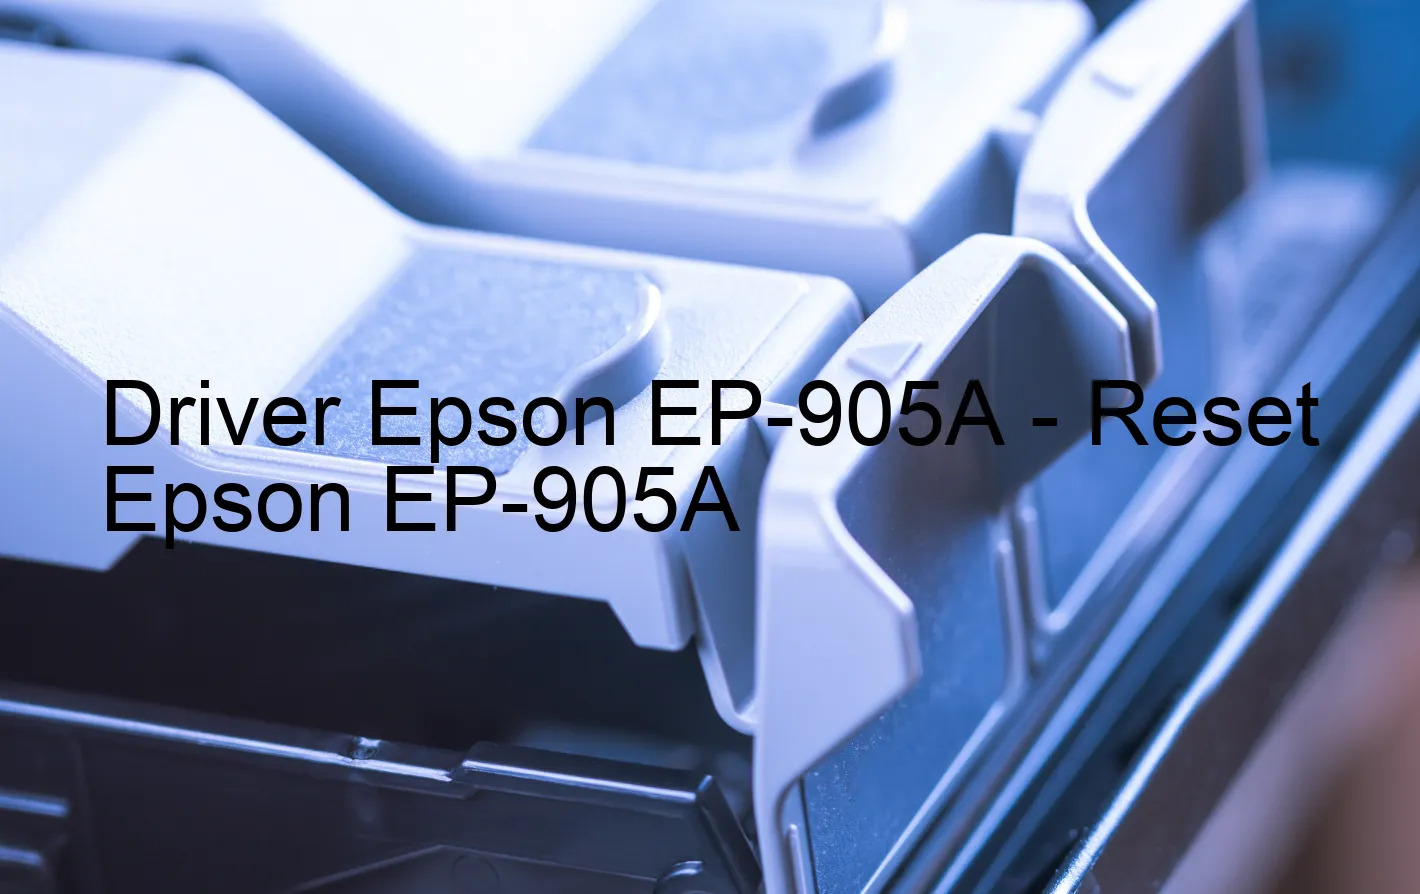 Epson EP-905Aのドライバー、Epson EP-905Aのリセットソフトウェア